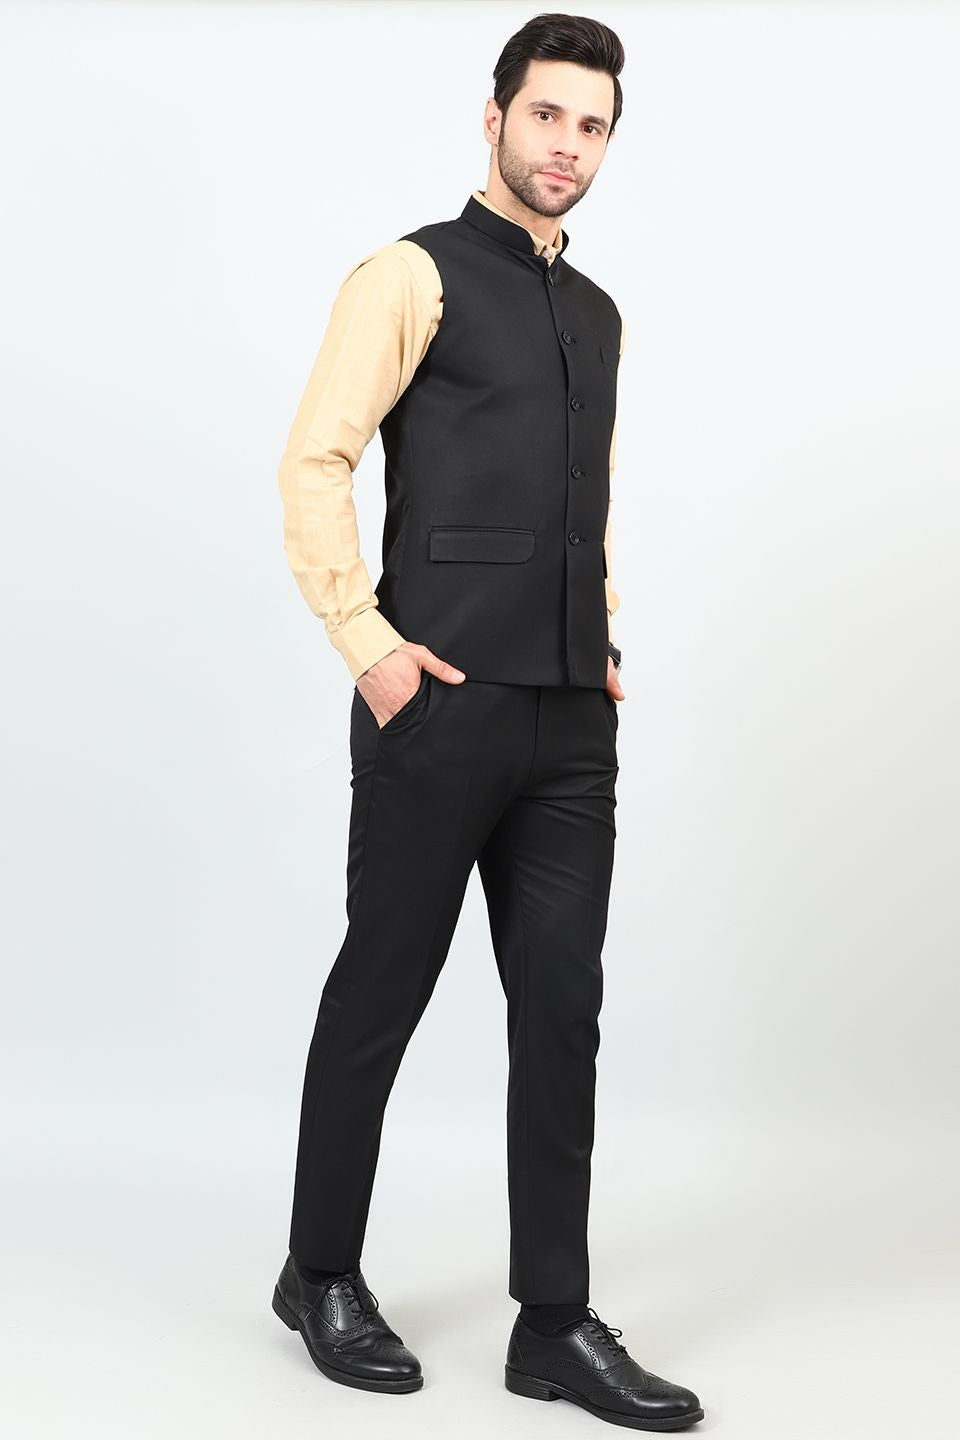 Poly Viscose Black Vest and Trouser Set